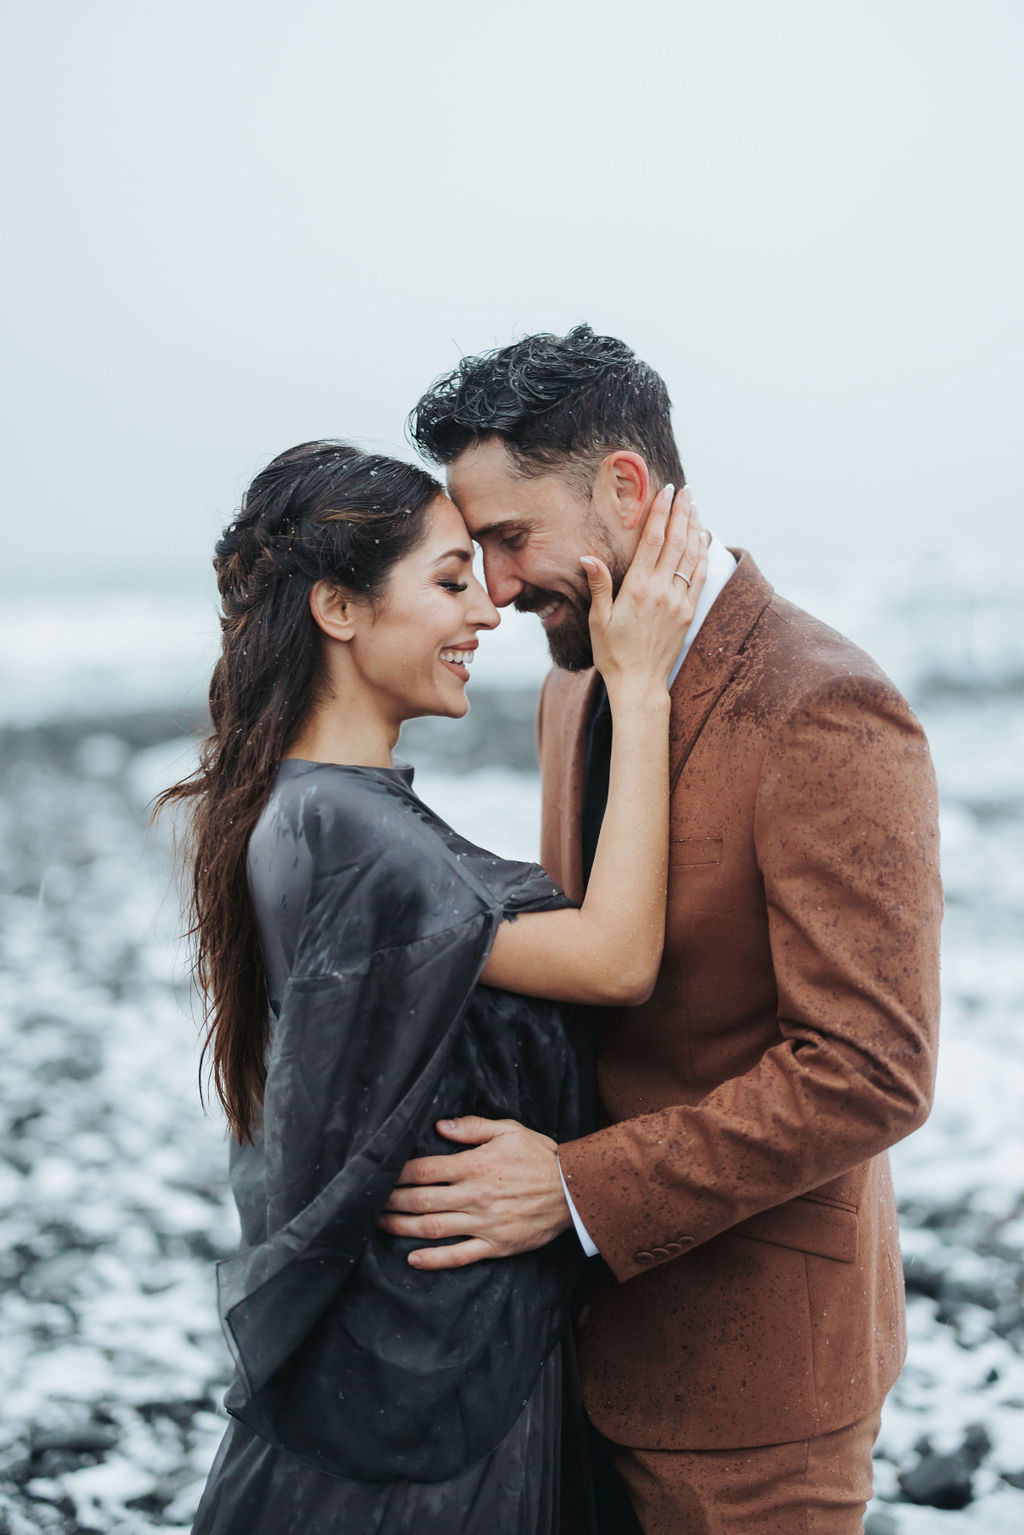 couple portrait kissing on icy black rock beach